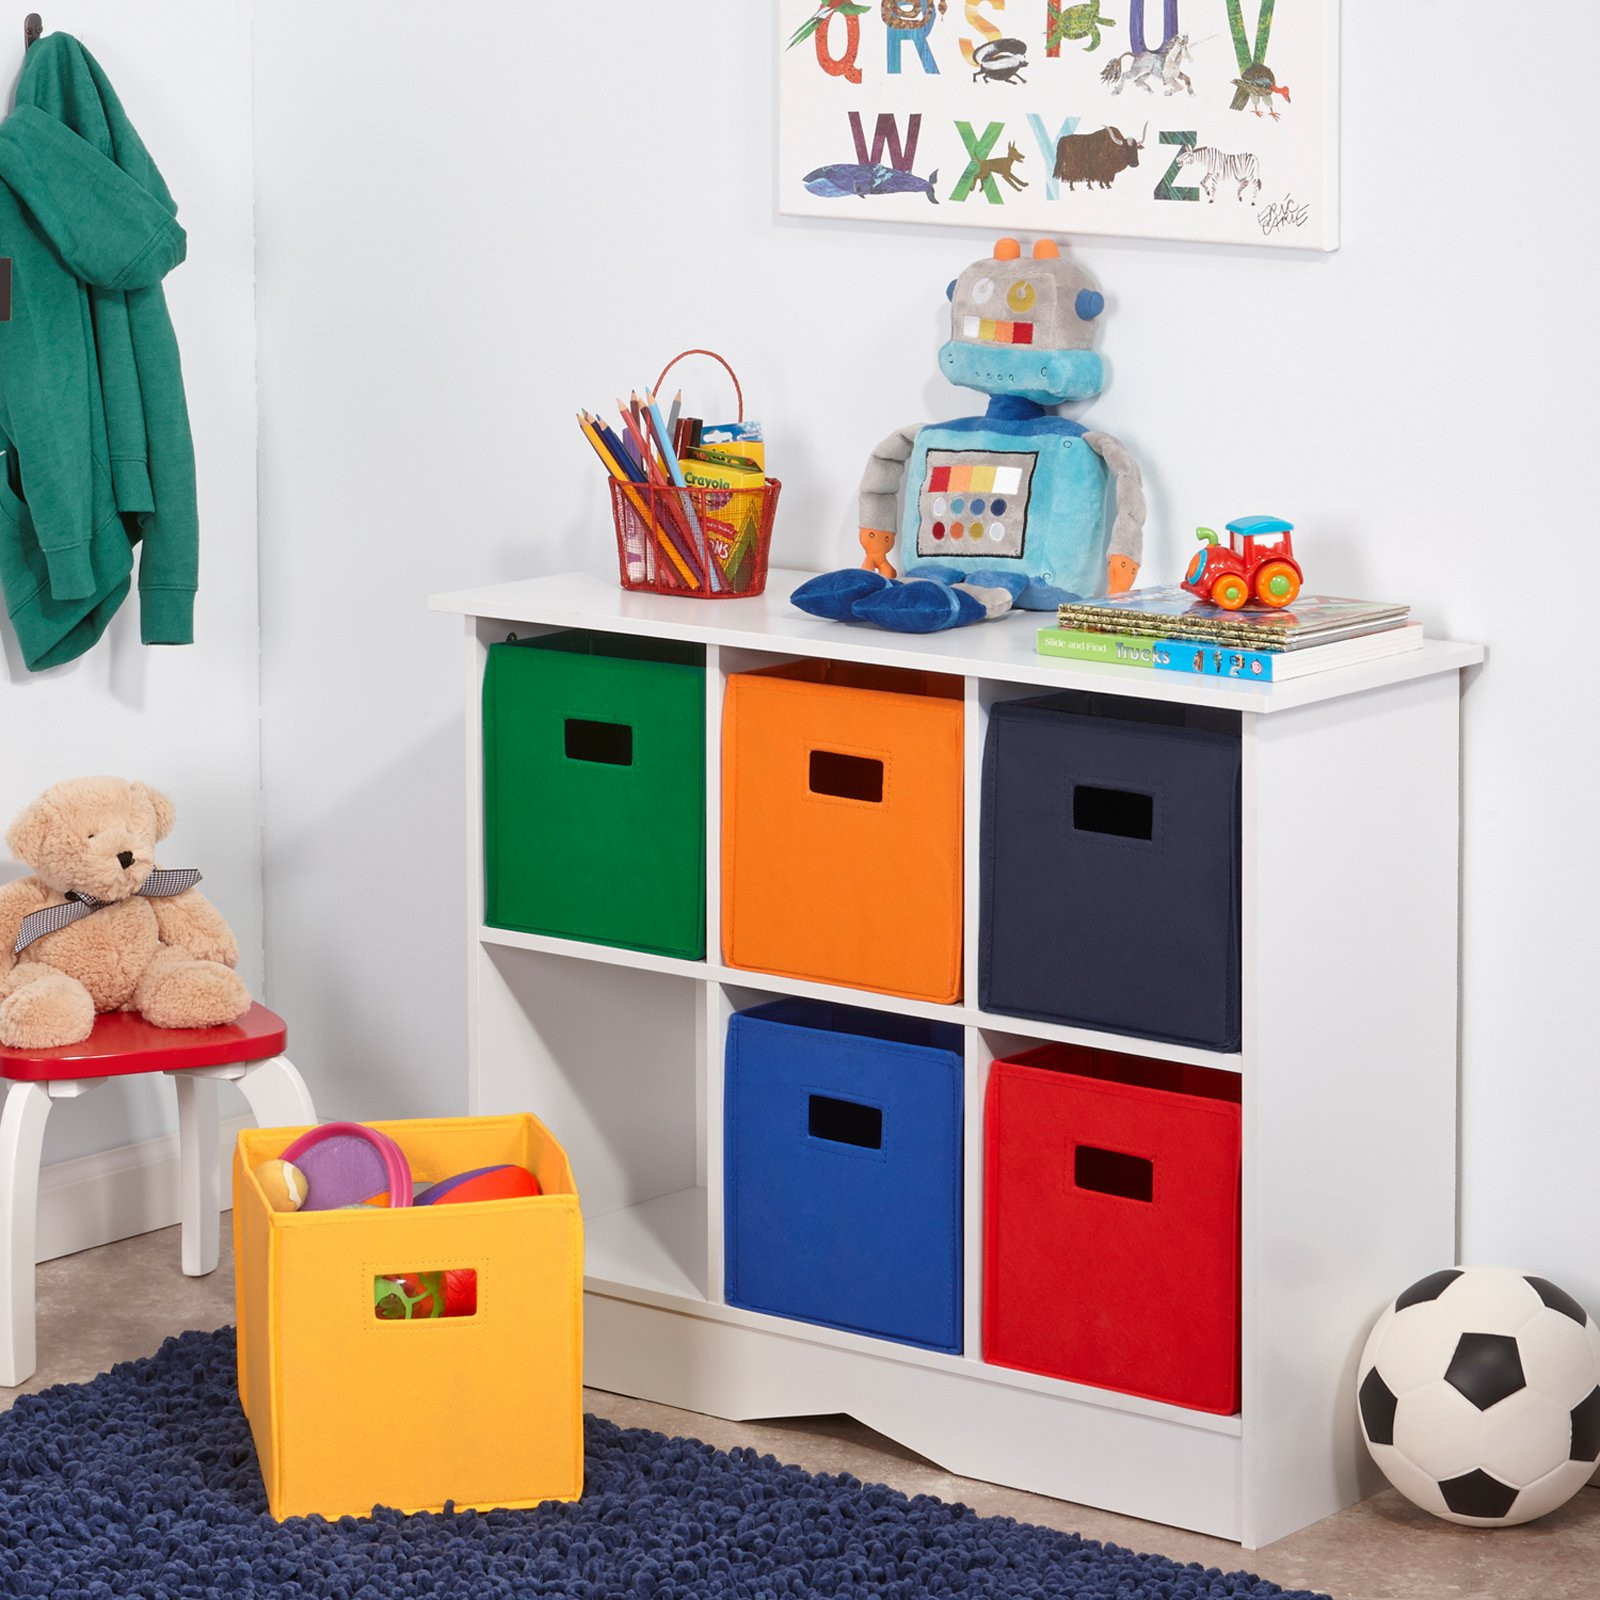 Storage Bins For Kids Room
 RiverRidge Kids White Cabinet with 6 Bins Toy Storage at